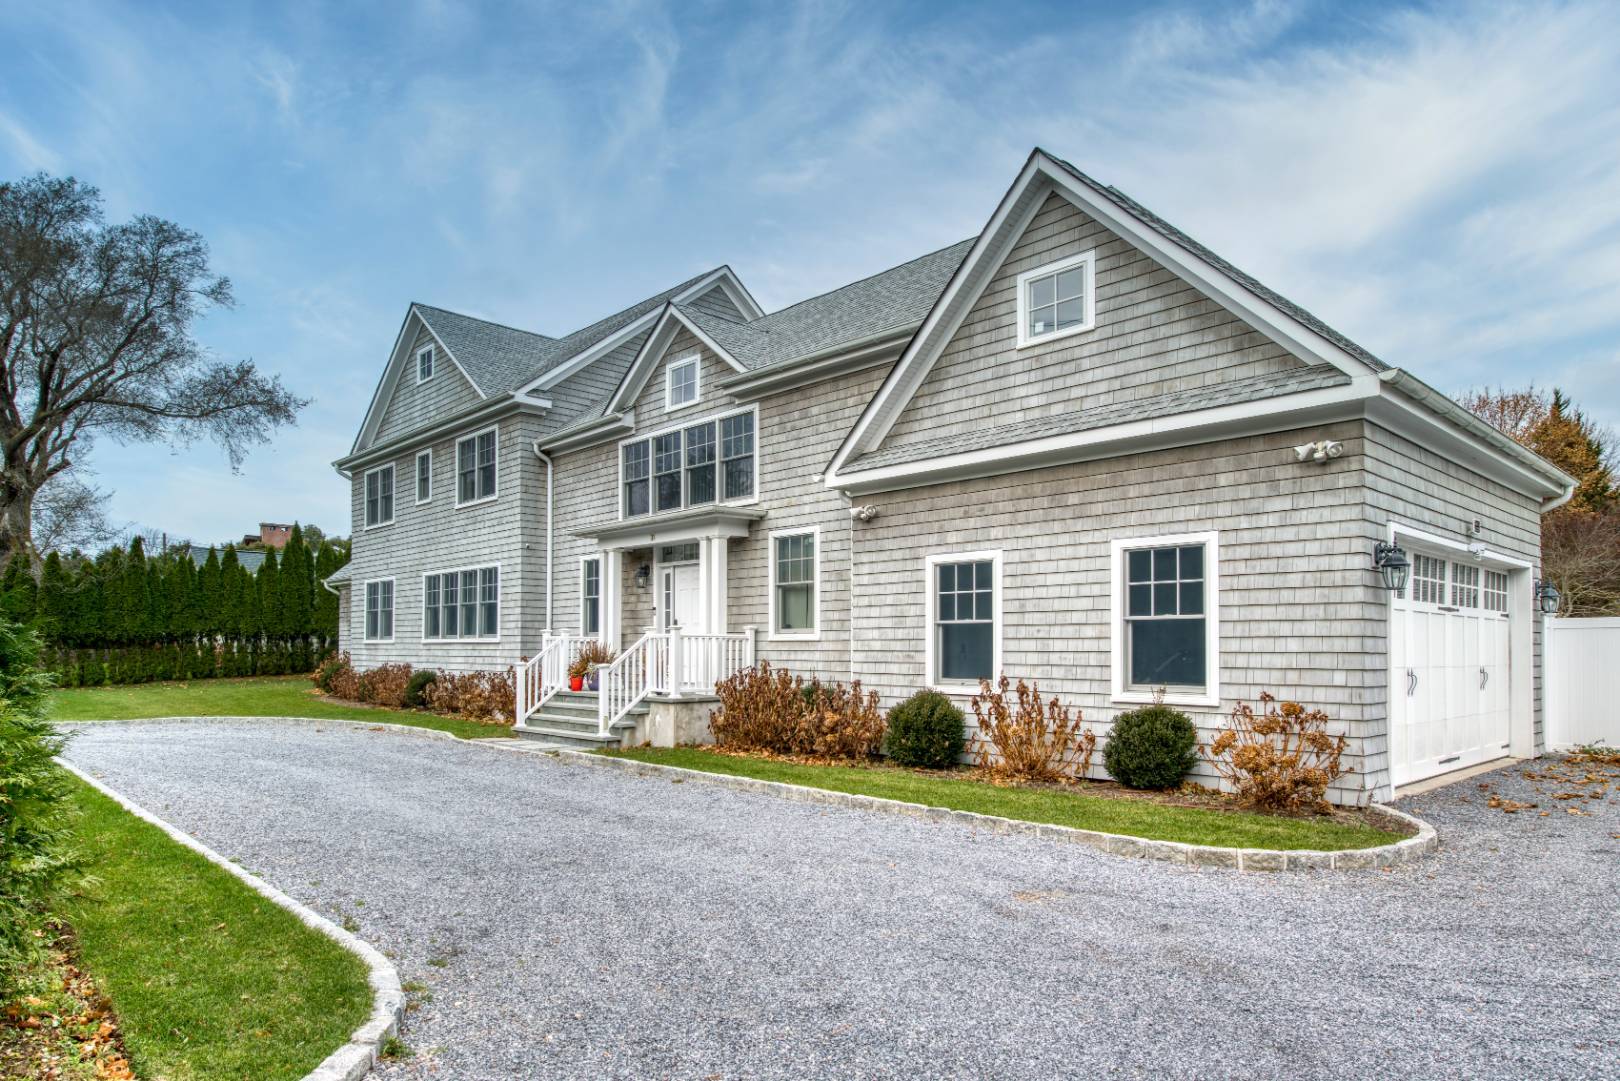 Rental Property at Village Of Southampton, Village Of Southampton, Hamptons, NY - Bedrooms: 5 
Bathrooms: 5  - $55,000 MO.